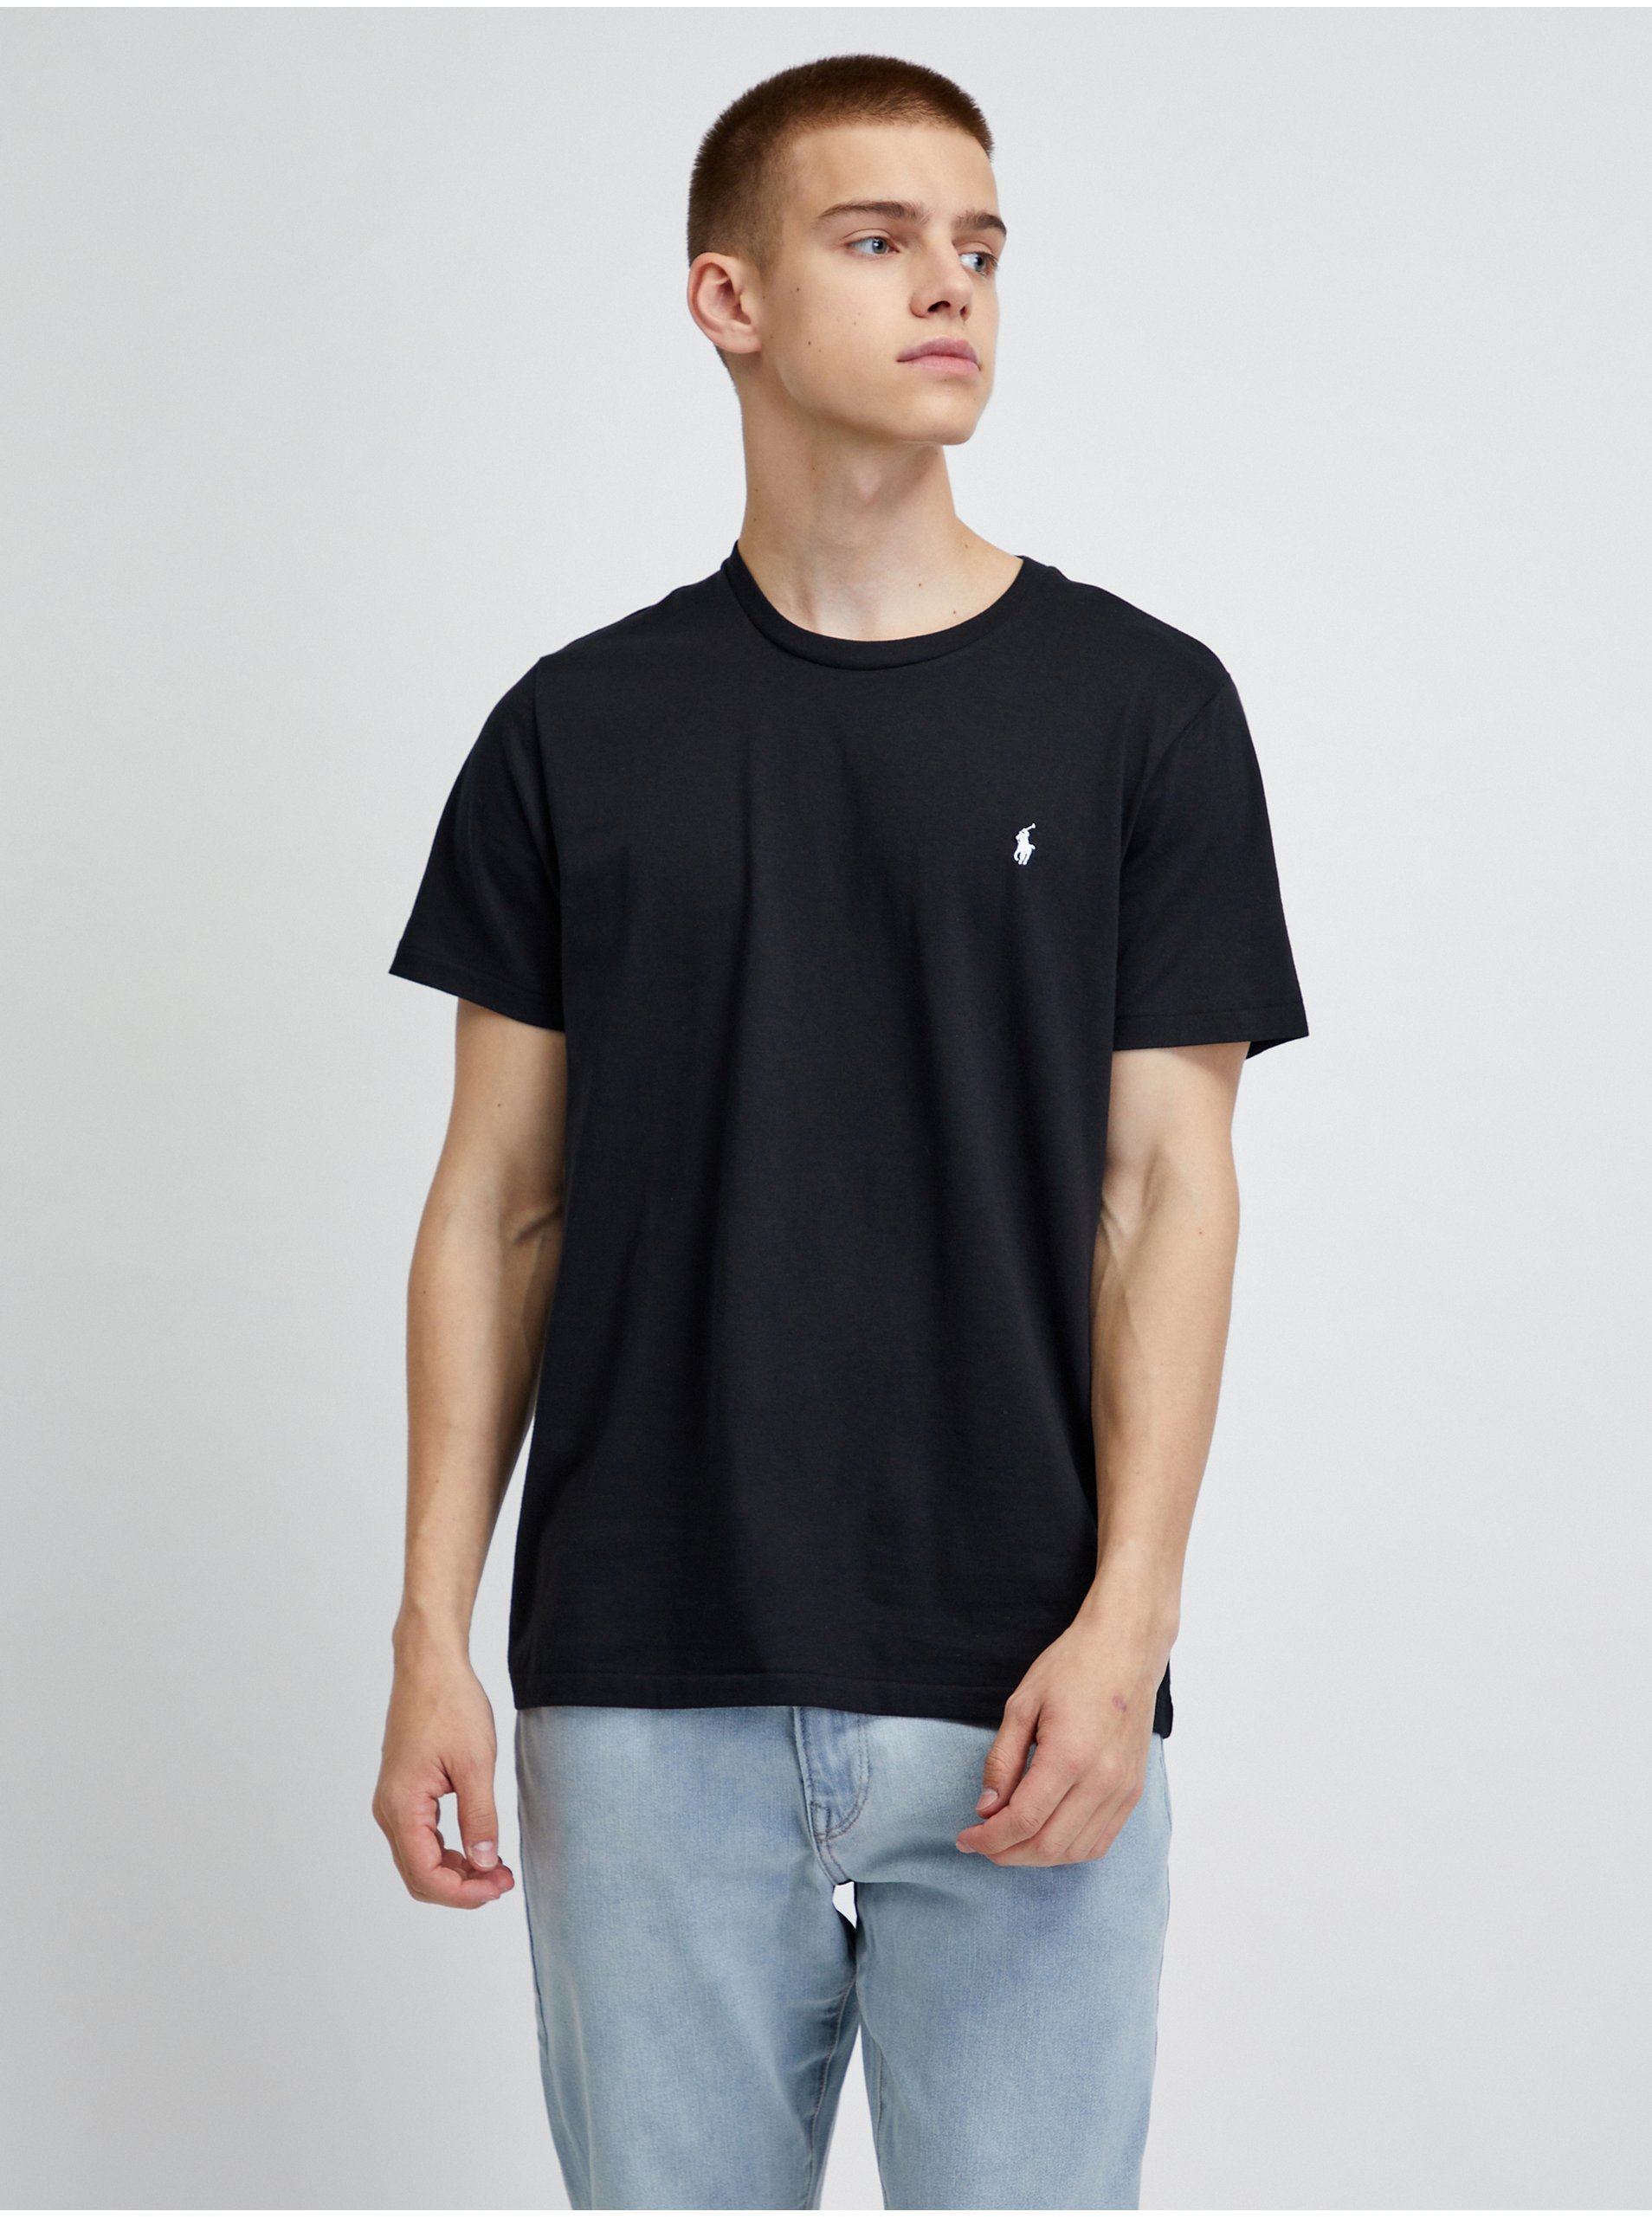 Lacno Čierne pánske basic tričko Ralph Lauren